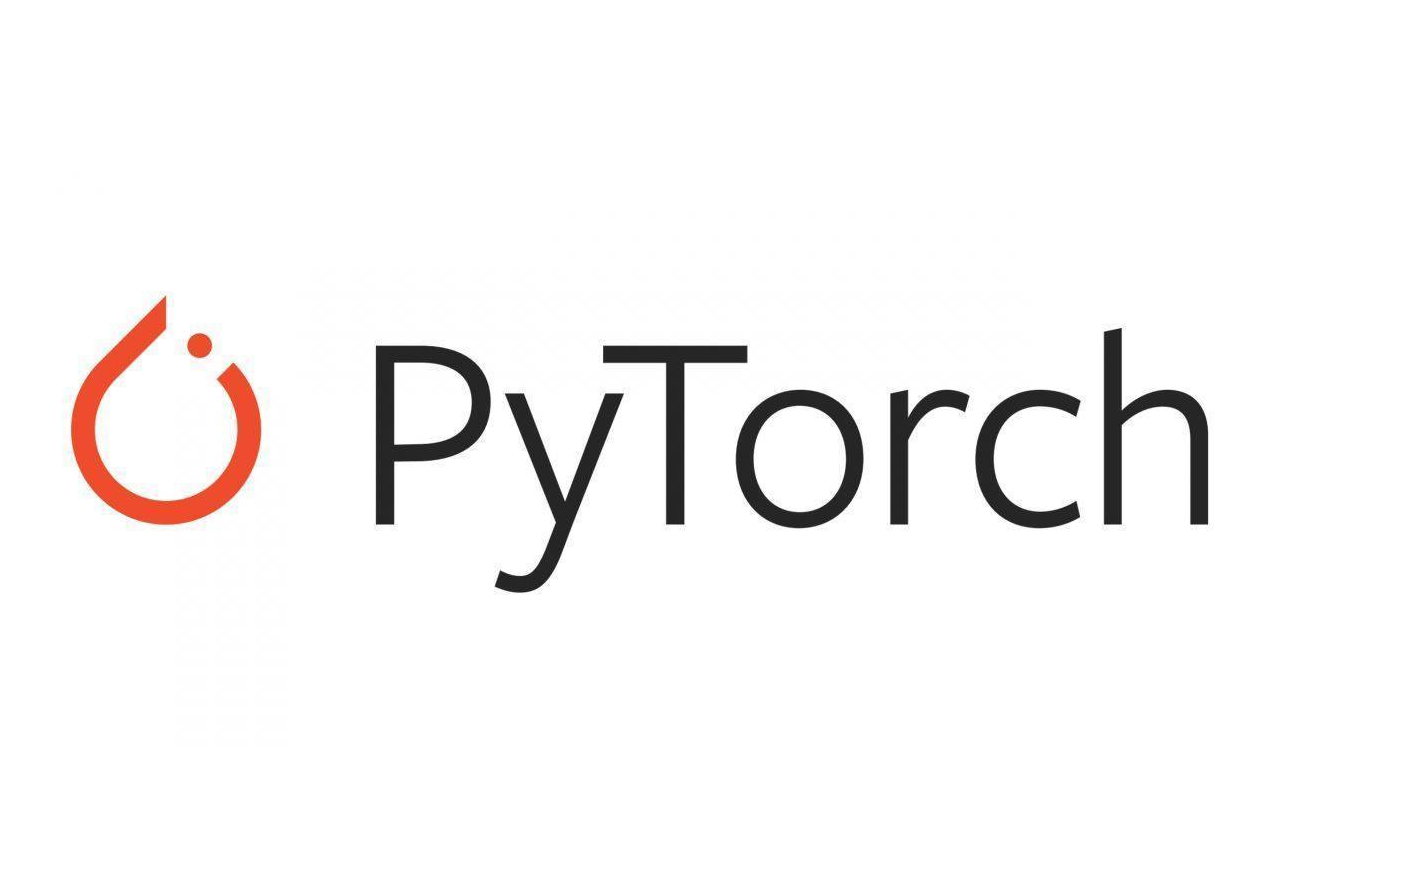 【Pytorch】干货！2022年B站最全最好的深度学习框架pytorch教程！绝对通俗易懂！附配套资料！！收藏慢慢学！pytorch安装pytorch入门